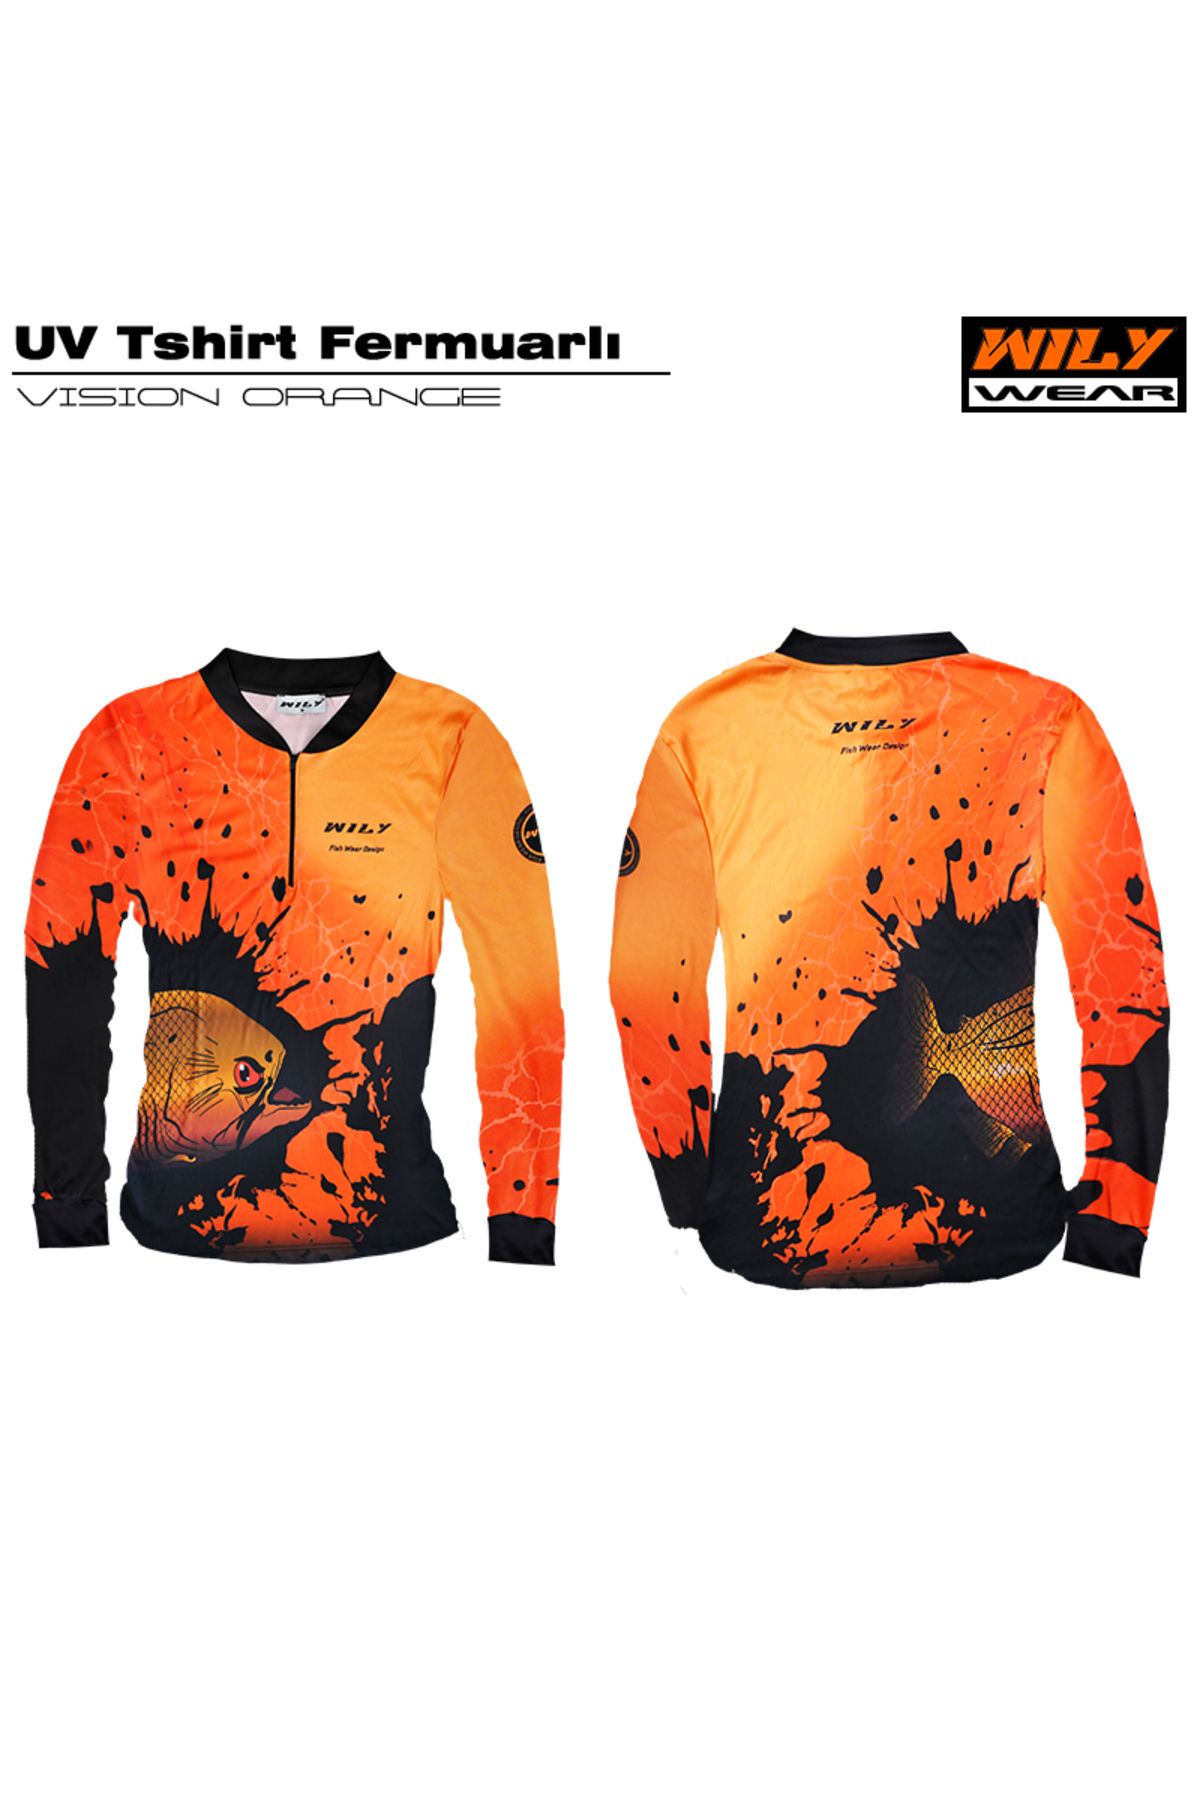 Halbart Wily Wear UV T-Shirt Fermuarlı Vision Orange